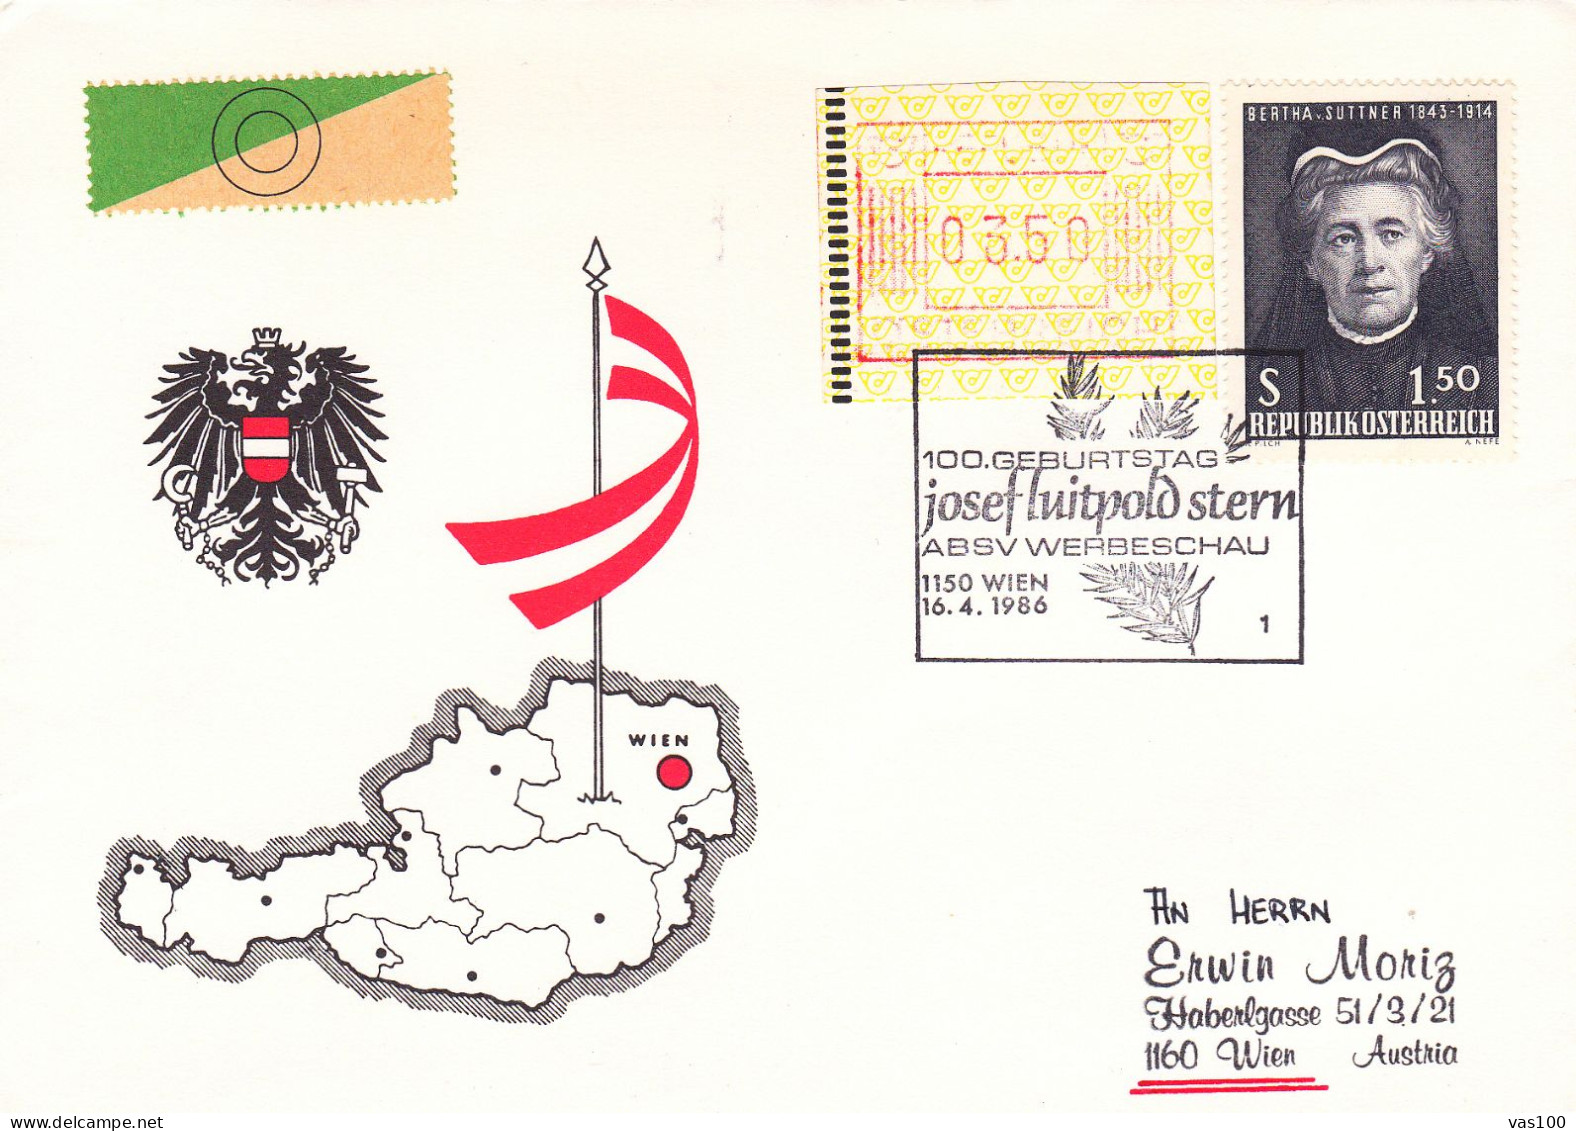 AUSTRIA POSTAL HISTORY / ABSV WERBESCHAU, 16.04.1986 - Brieven En Documenten